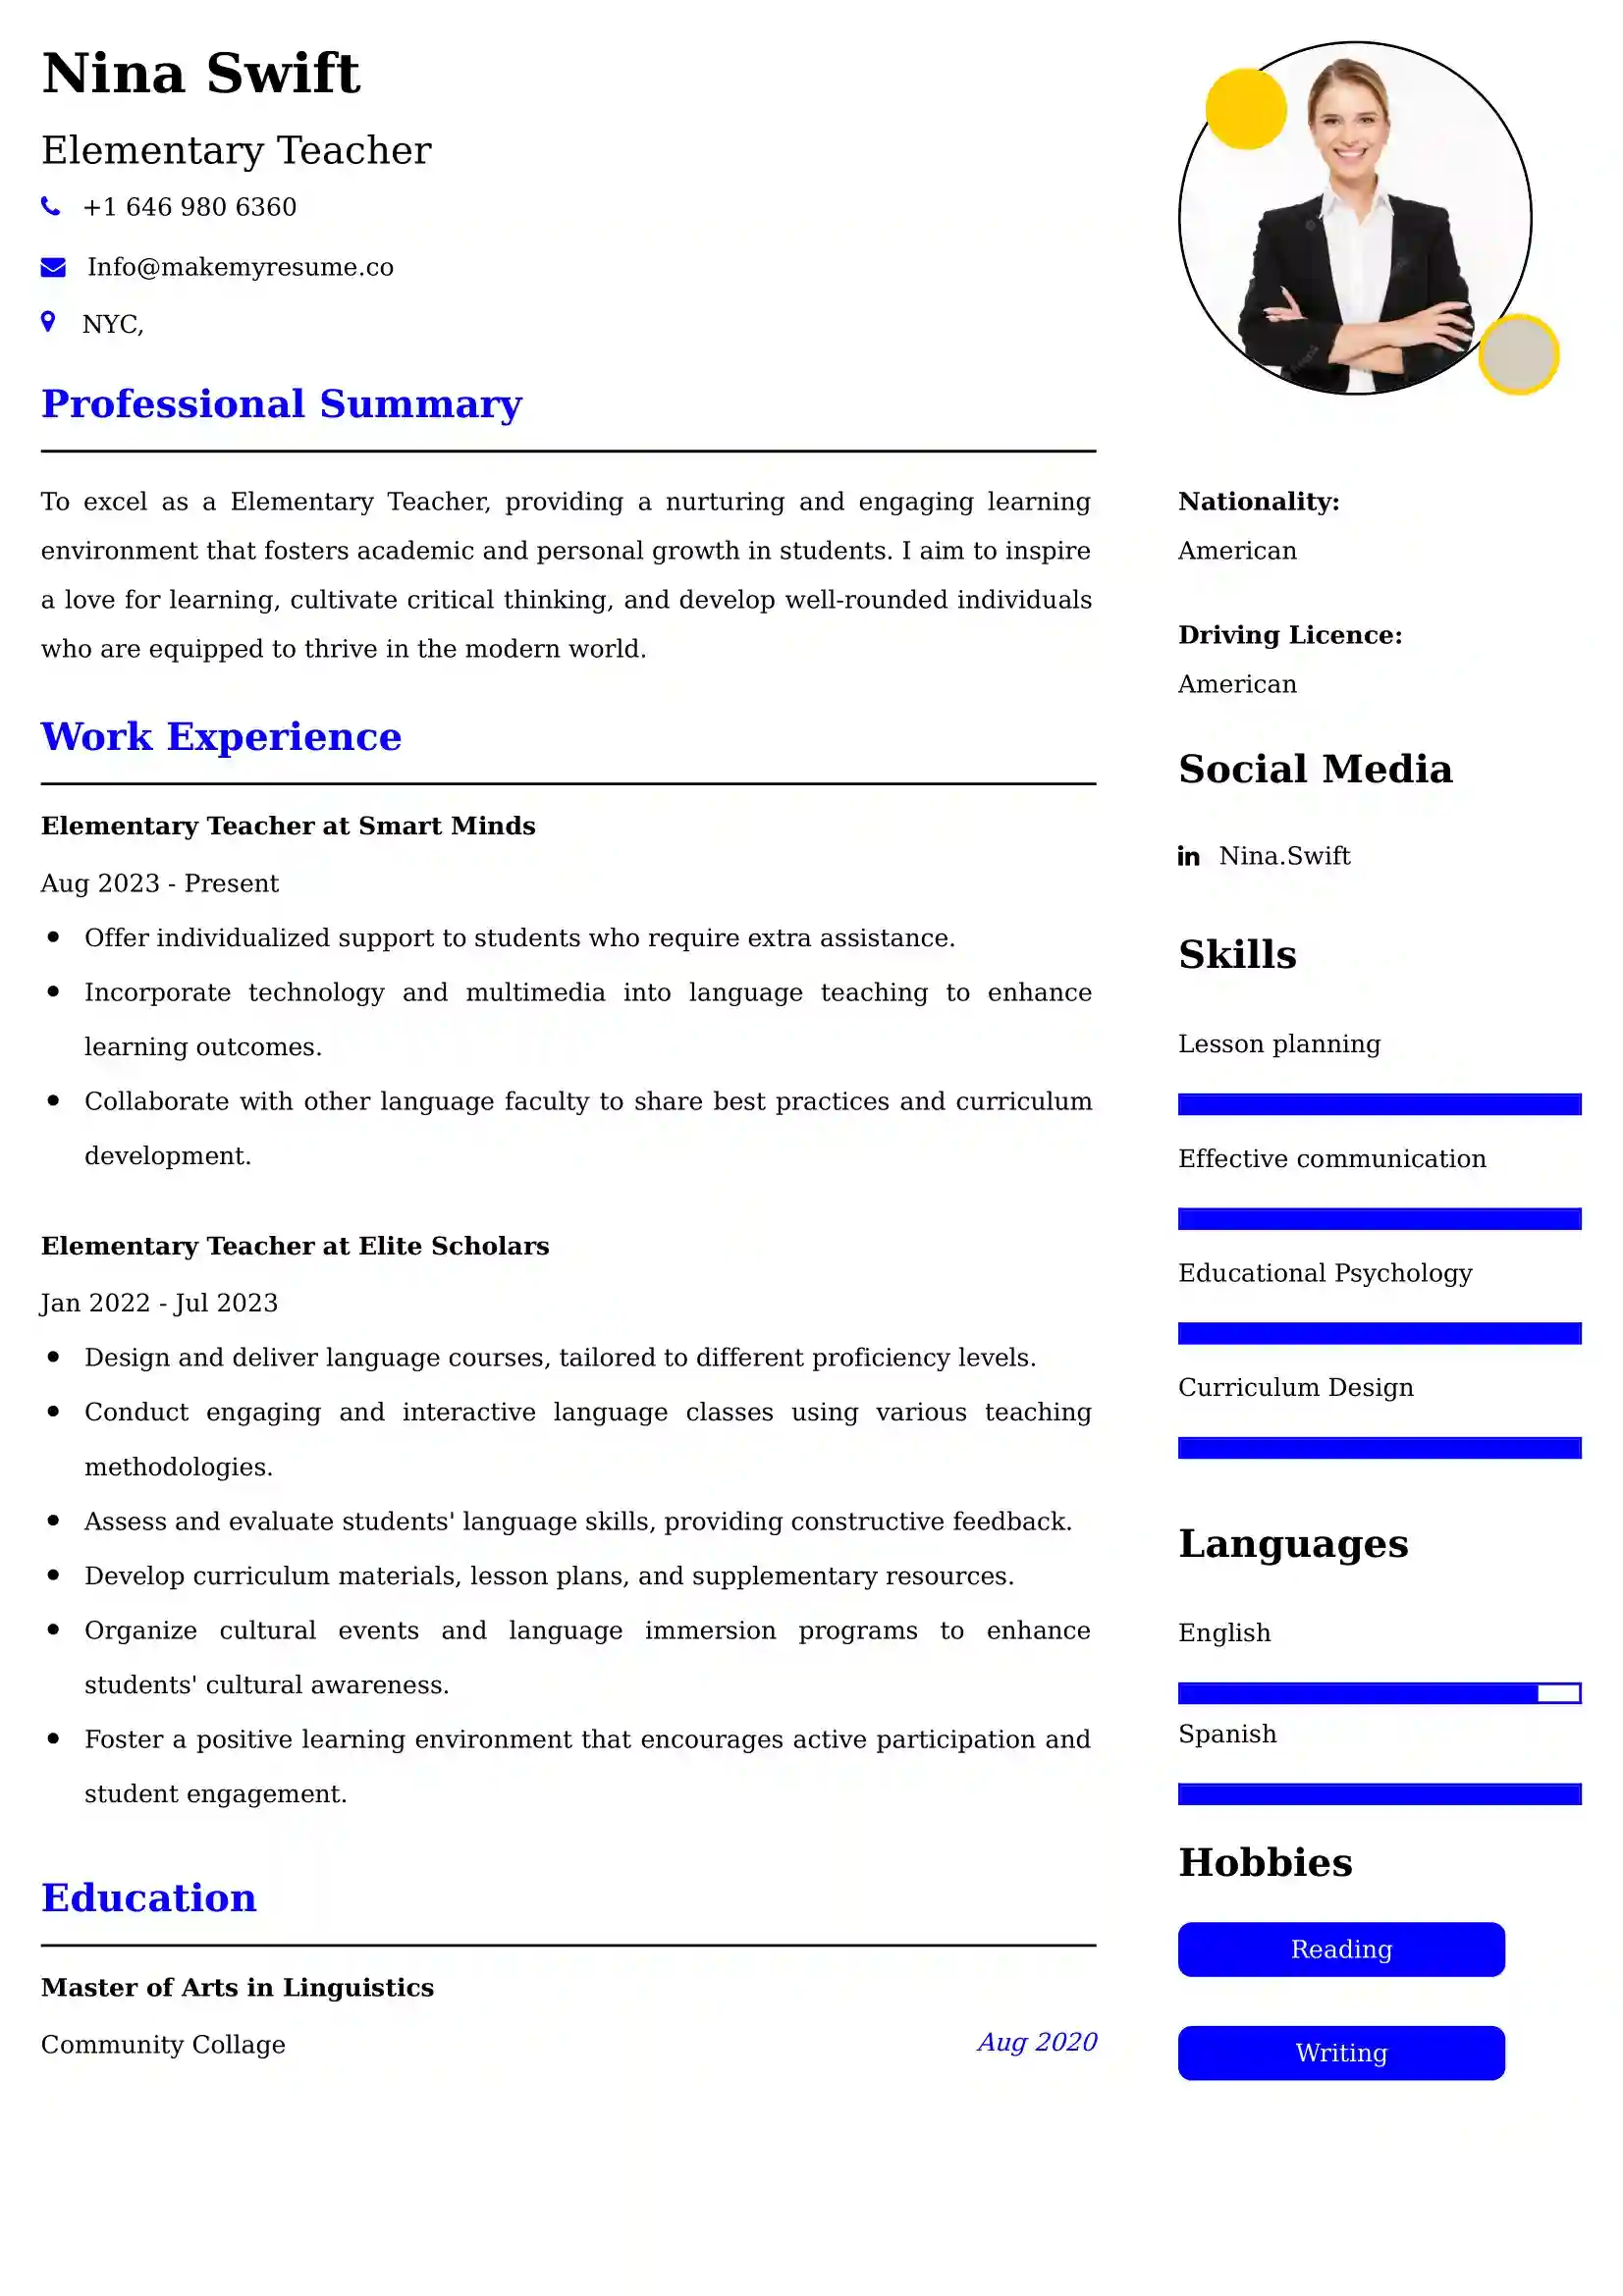 Elementary Teacher CV Examples - US Format